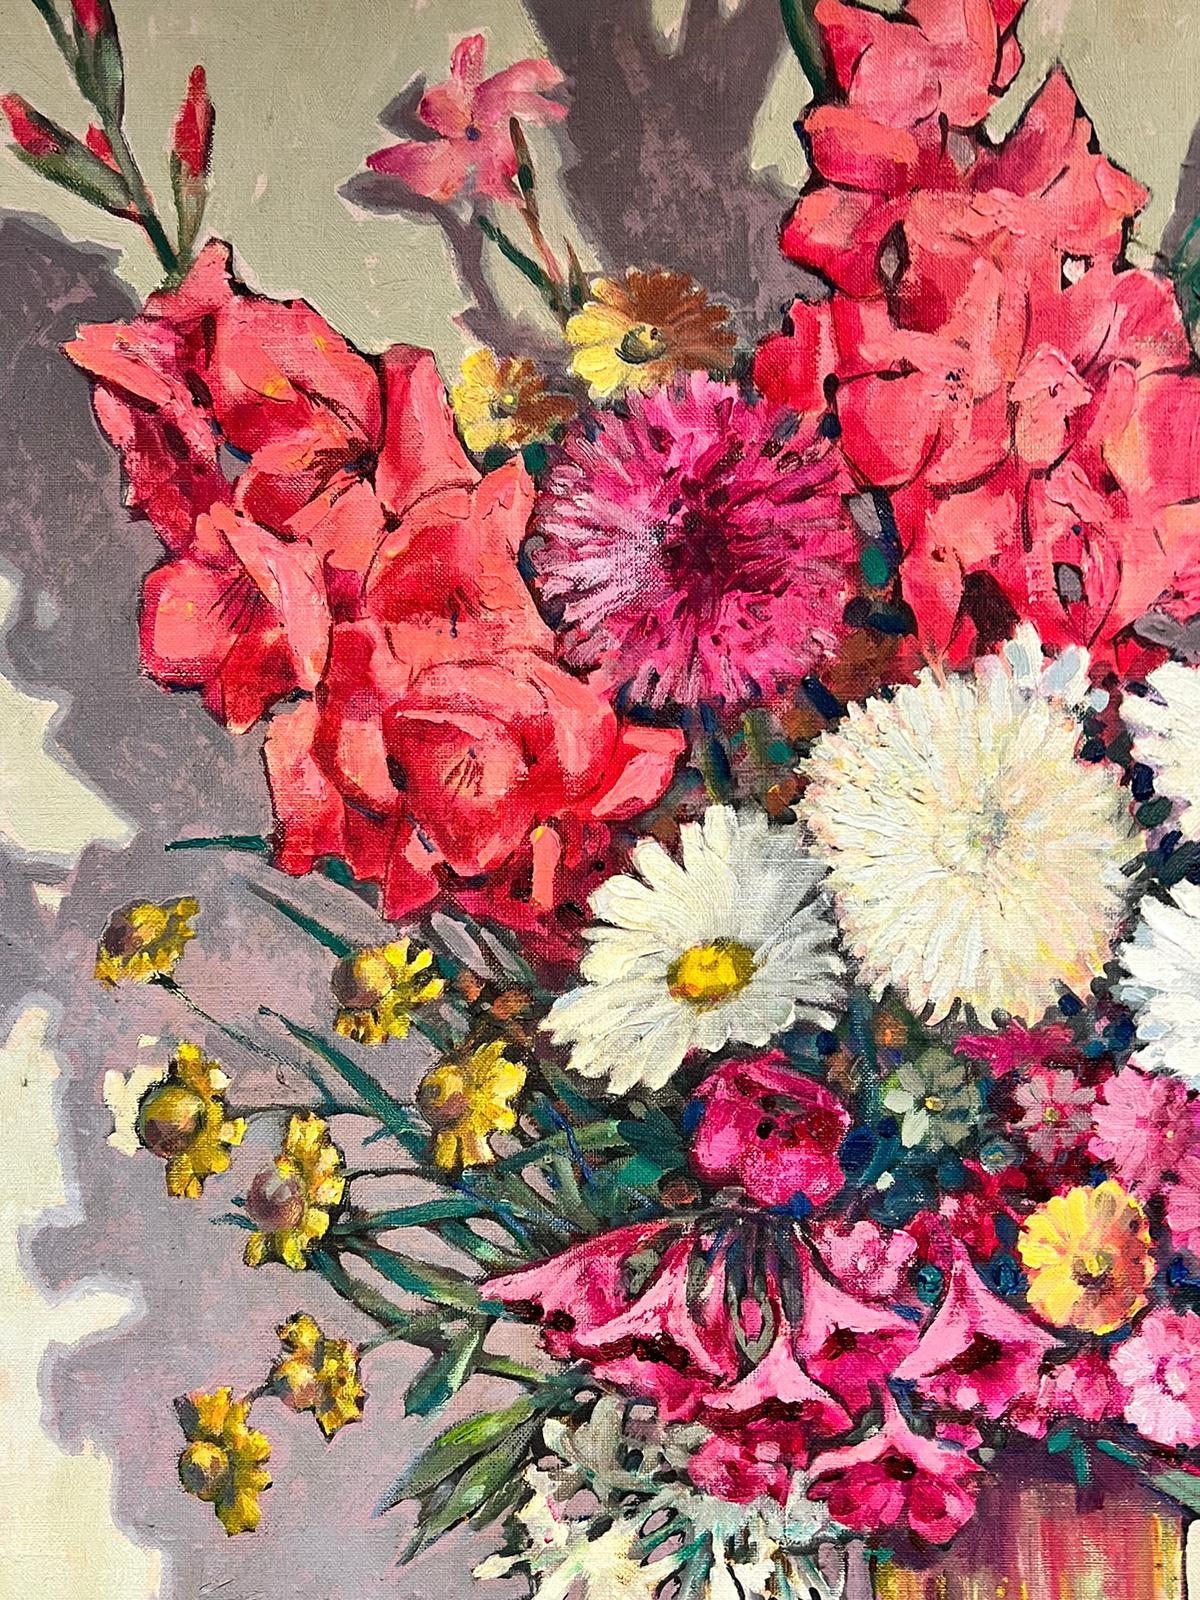 Huge 1960's European Still Life Burst of Color Flowers in Vase - Impressionist Painting by 1960's Europen Oil